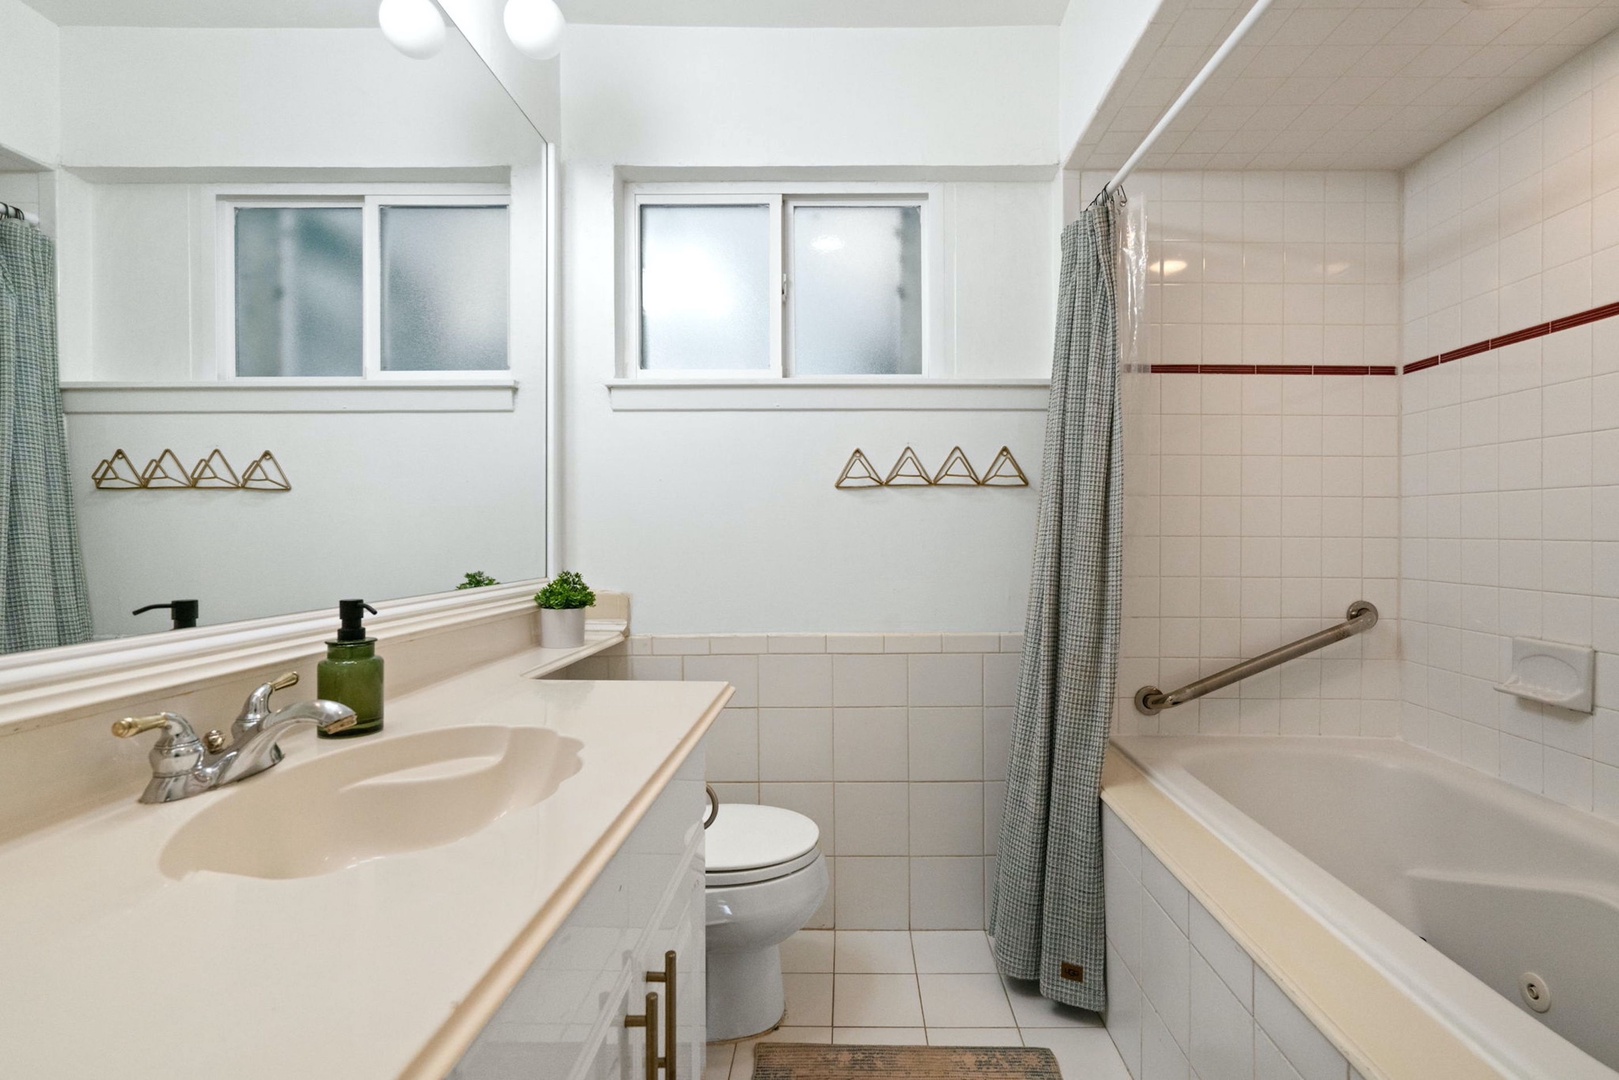 The main-floor full bath features a single vanity & shower/soaking tub combo